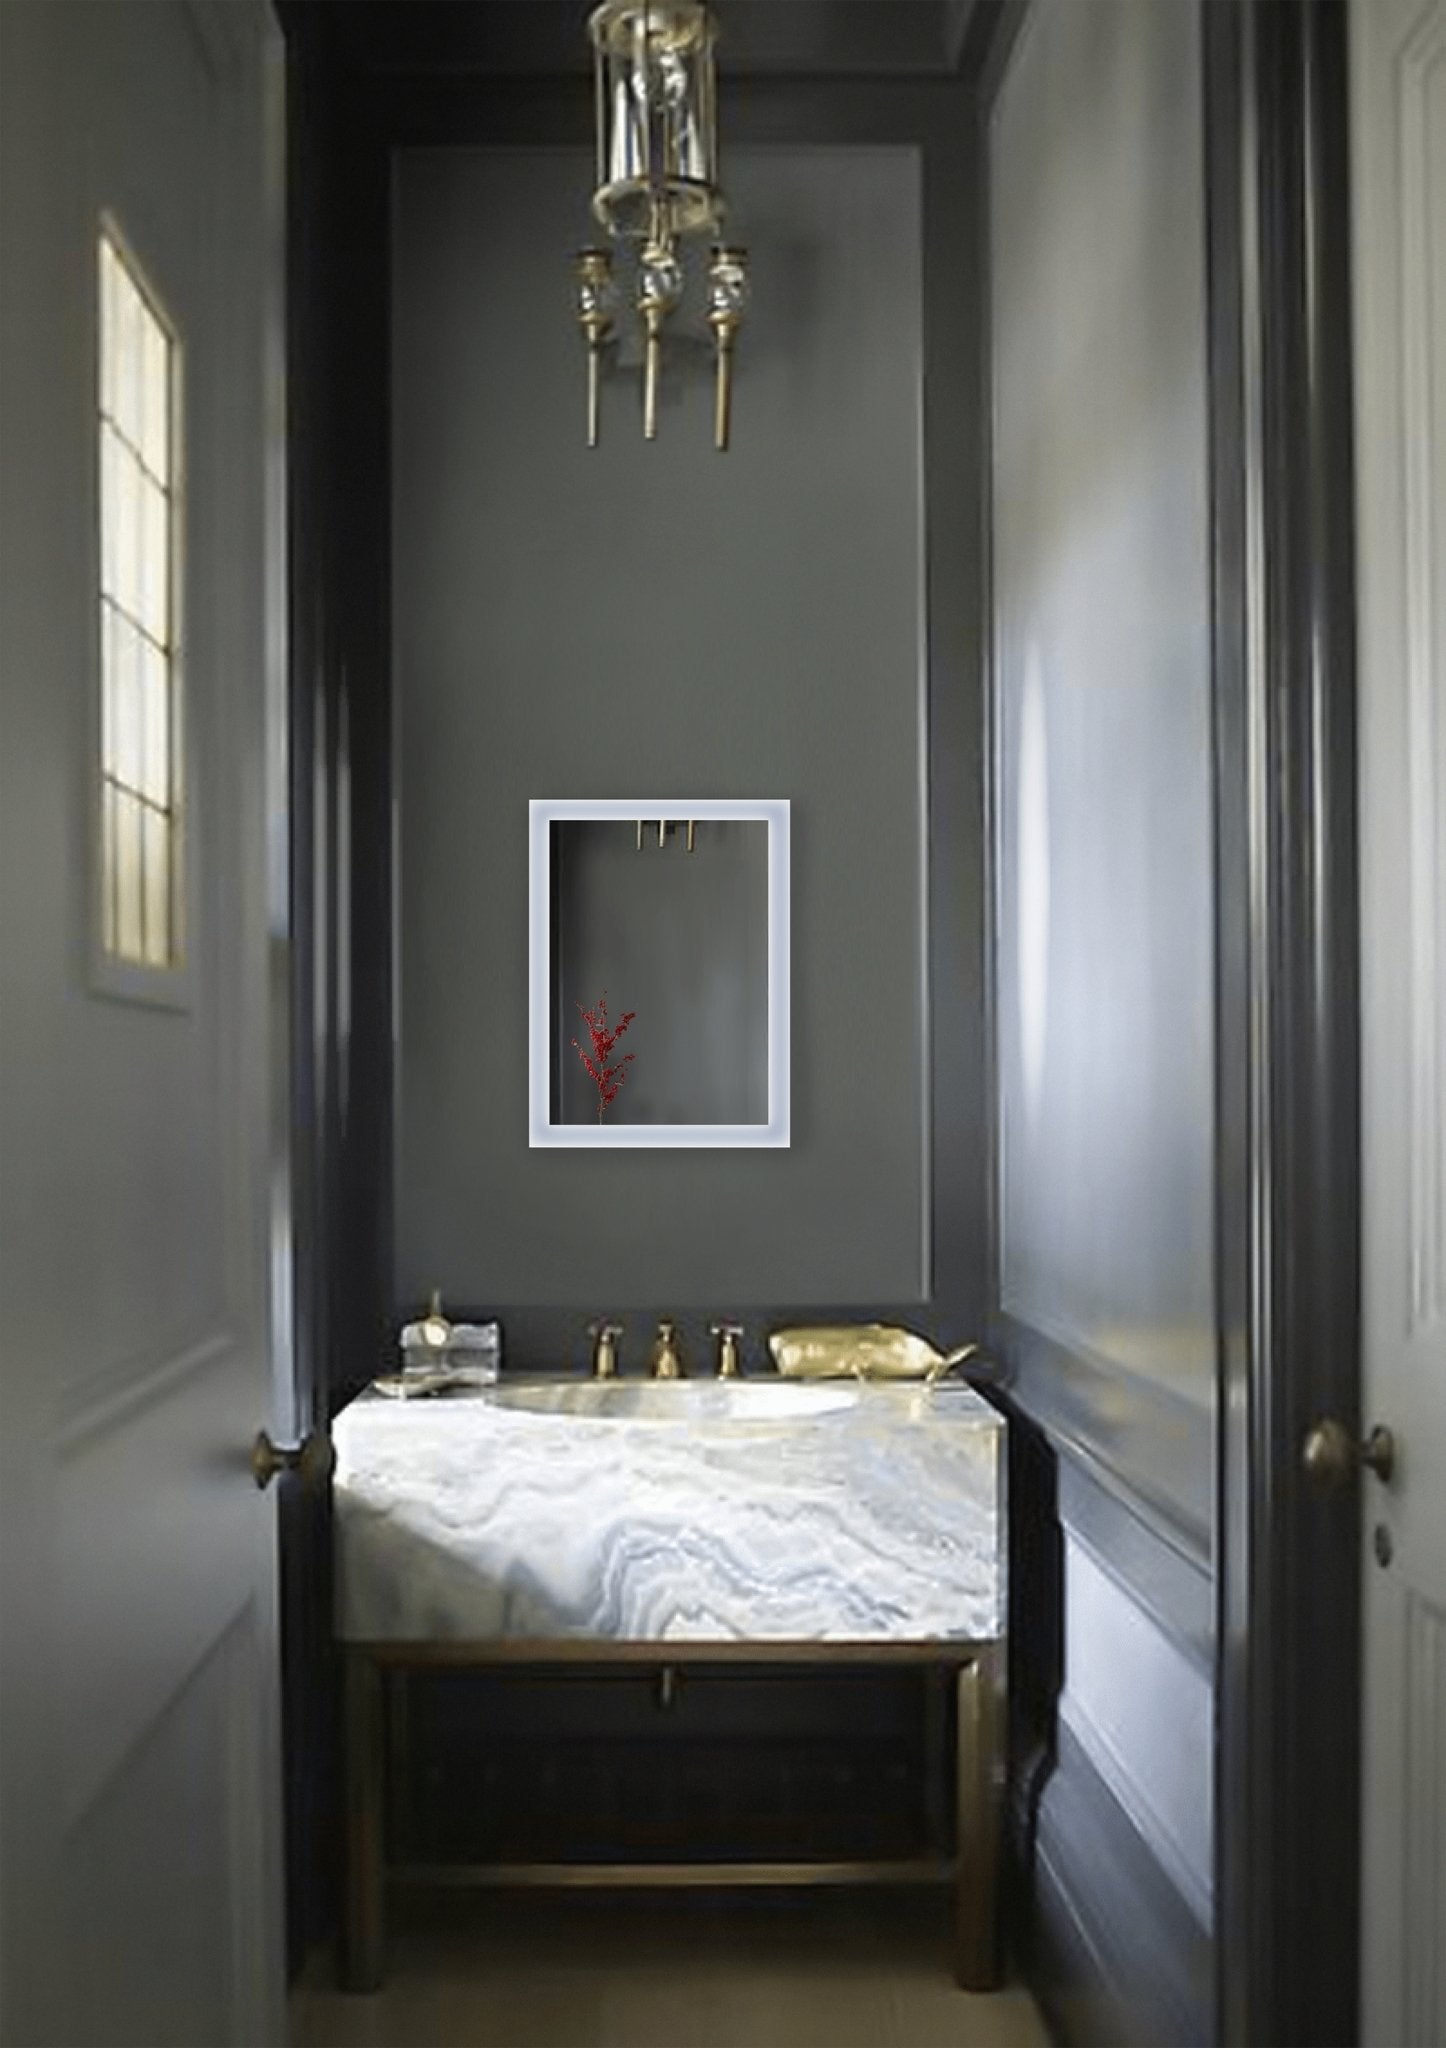 Bijou 15" x 20" LED Bathroom Mirror w/ Dimmer & Defogger | Small Lighted Vanity Mirror - Molaix - Molaix853962007279Lighted Wall Mirror,RectangleBIJOU1520